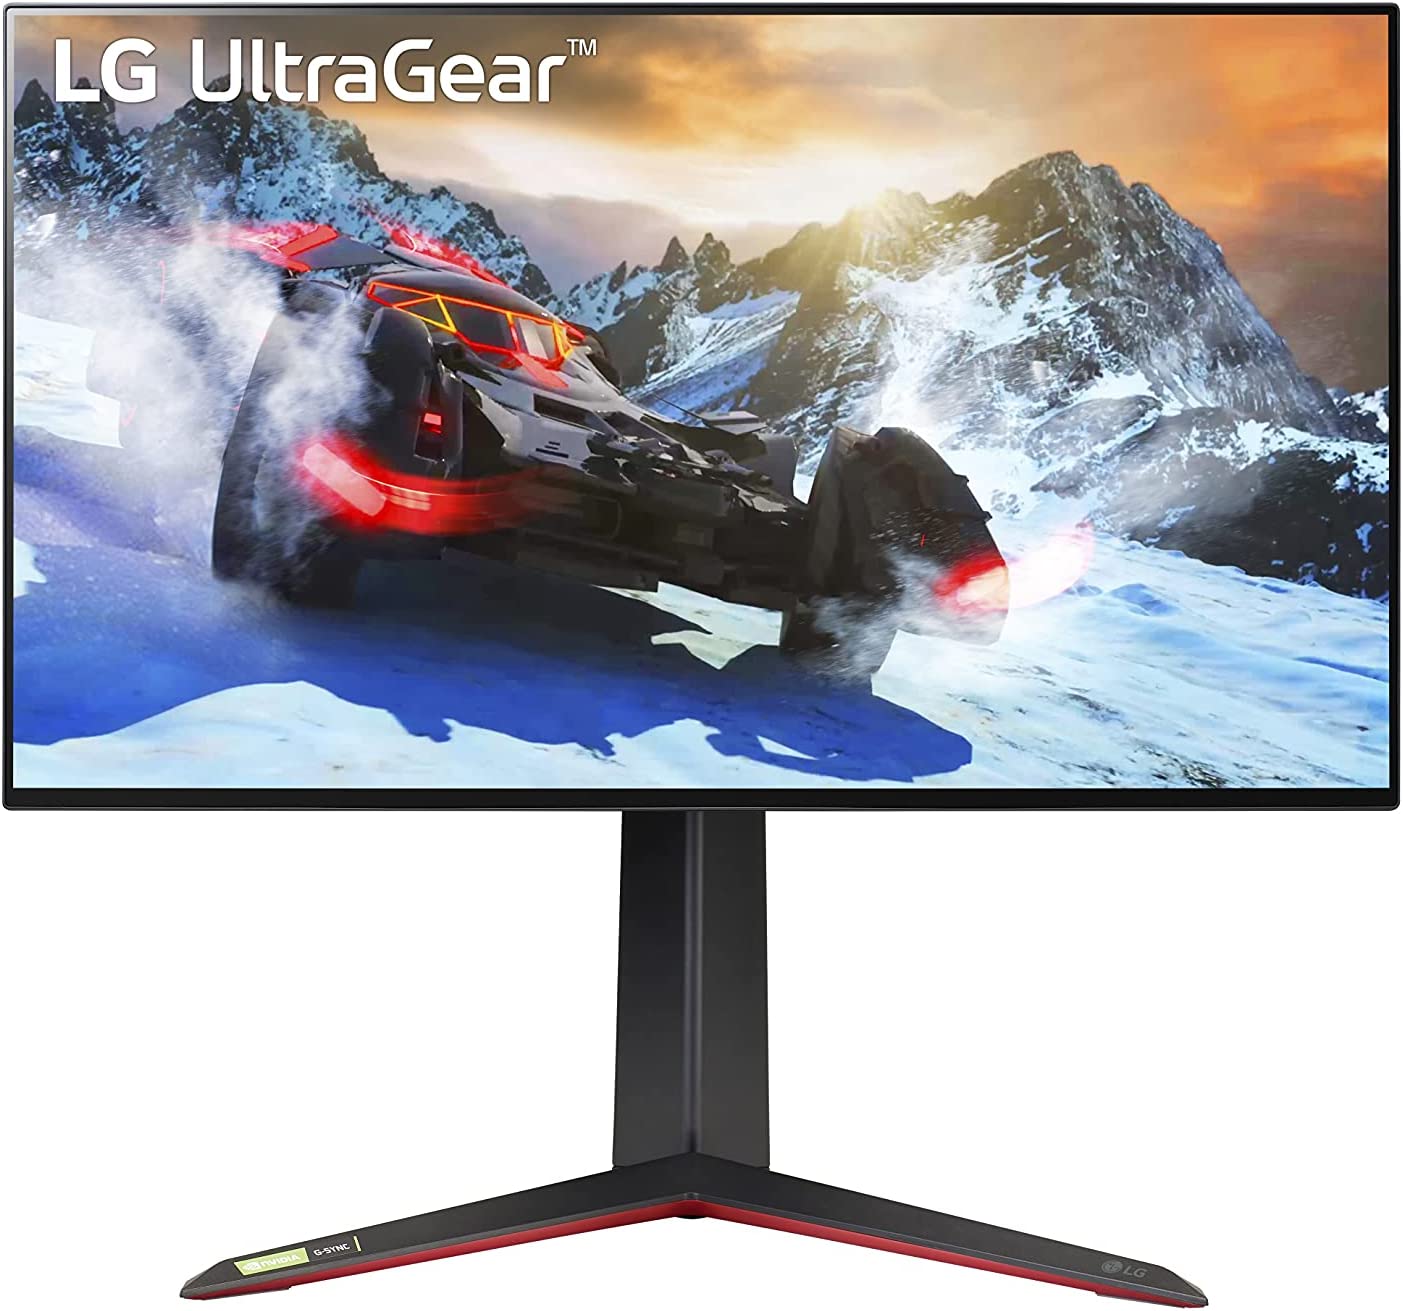 LG 27GP950-B 27” Ultragear UHD (3840 x 2160) Nano IPS Gaming Monitor w:1ms Response Time, 144Hz Refresh Rate, NVIDIA G-SYNC Compatible & AMD FreeSync